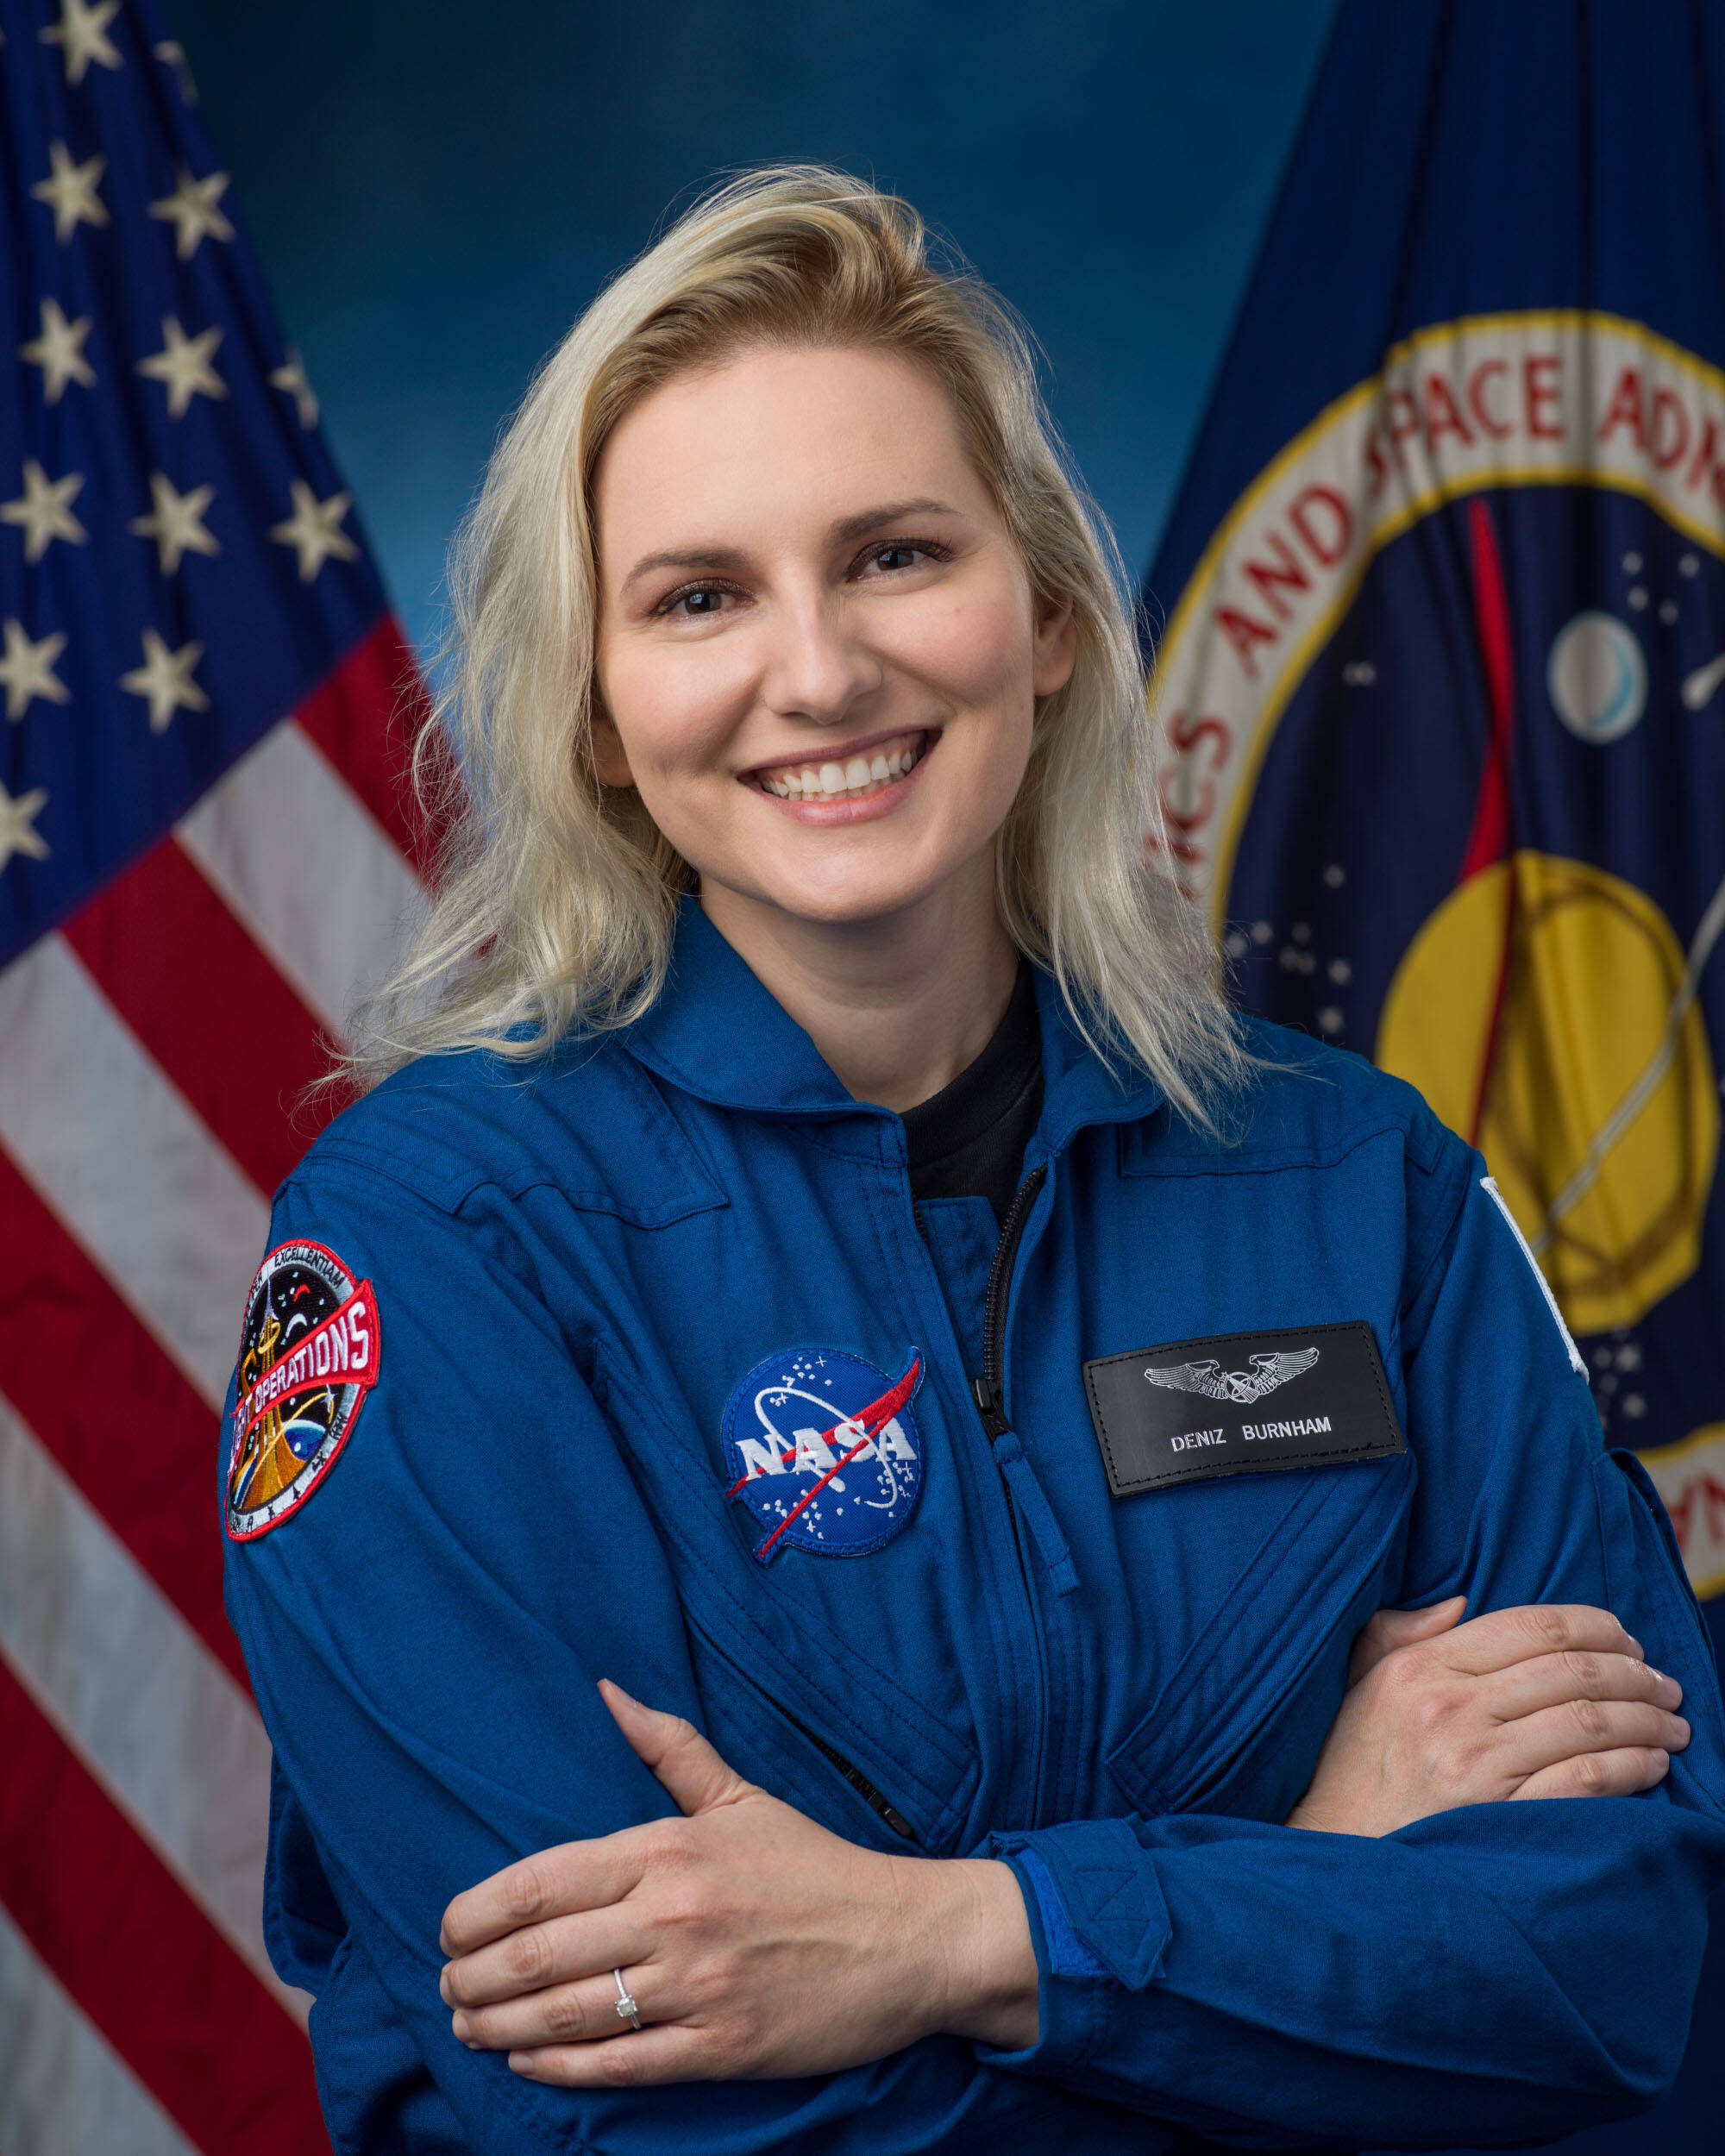 Robert Markowitz / NASA
Astronaut Candidate Deniz Burnham, of ASCAN Class of 2021, poses for an official photo on Dec. 3.